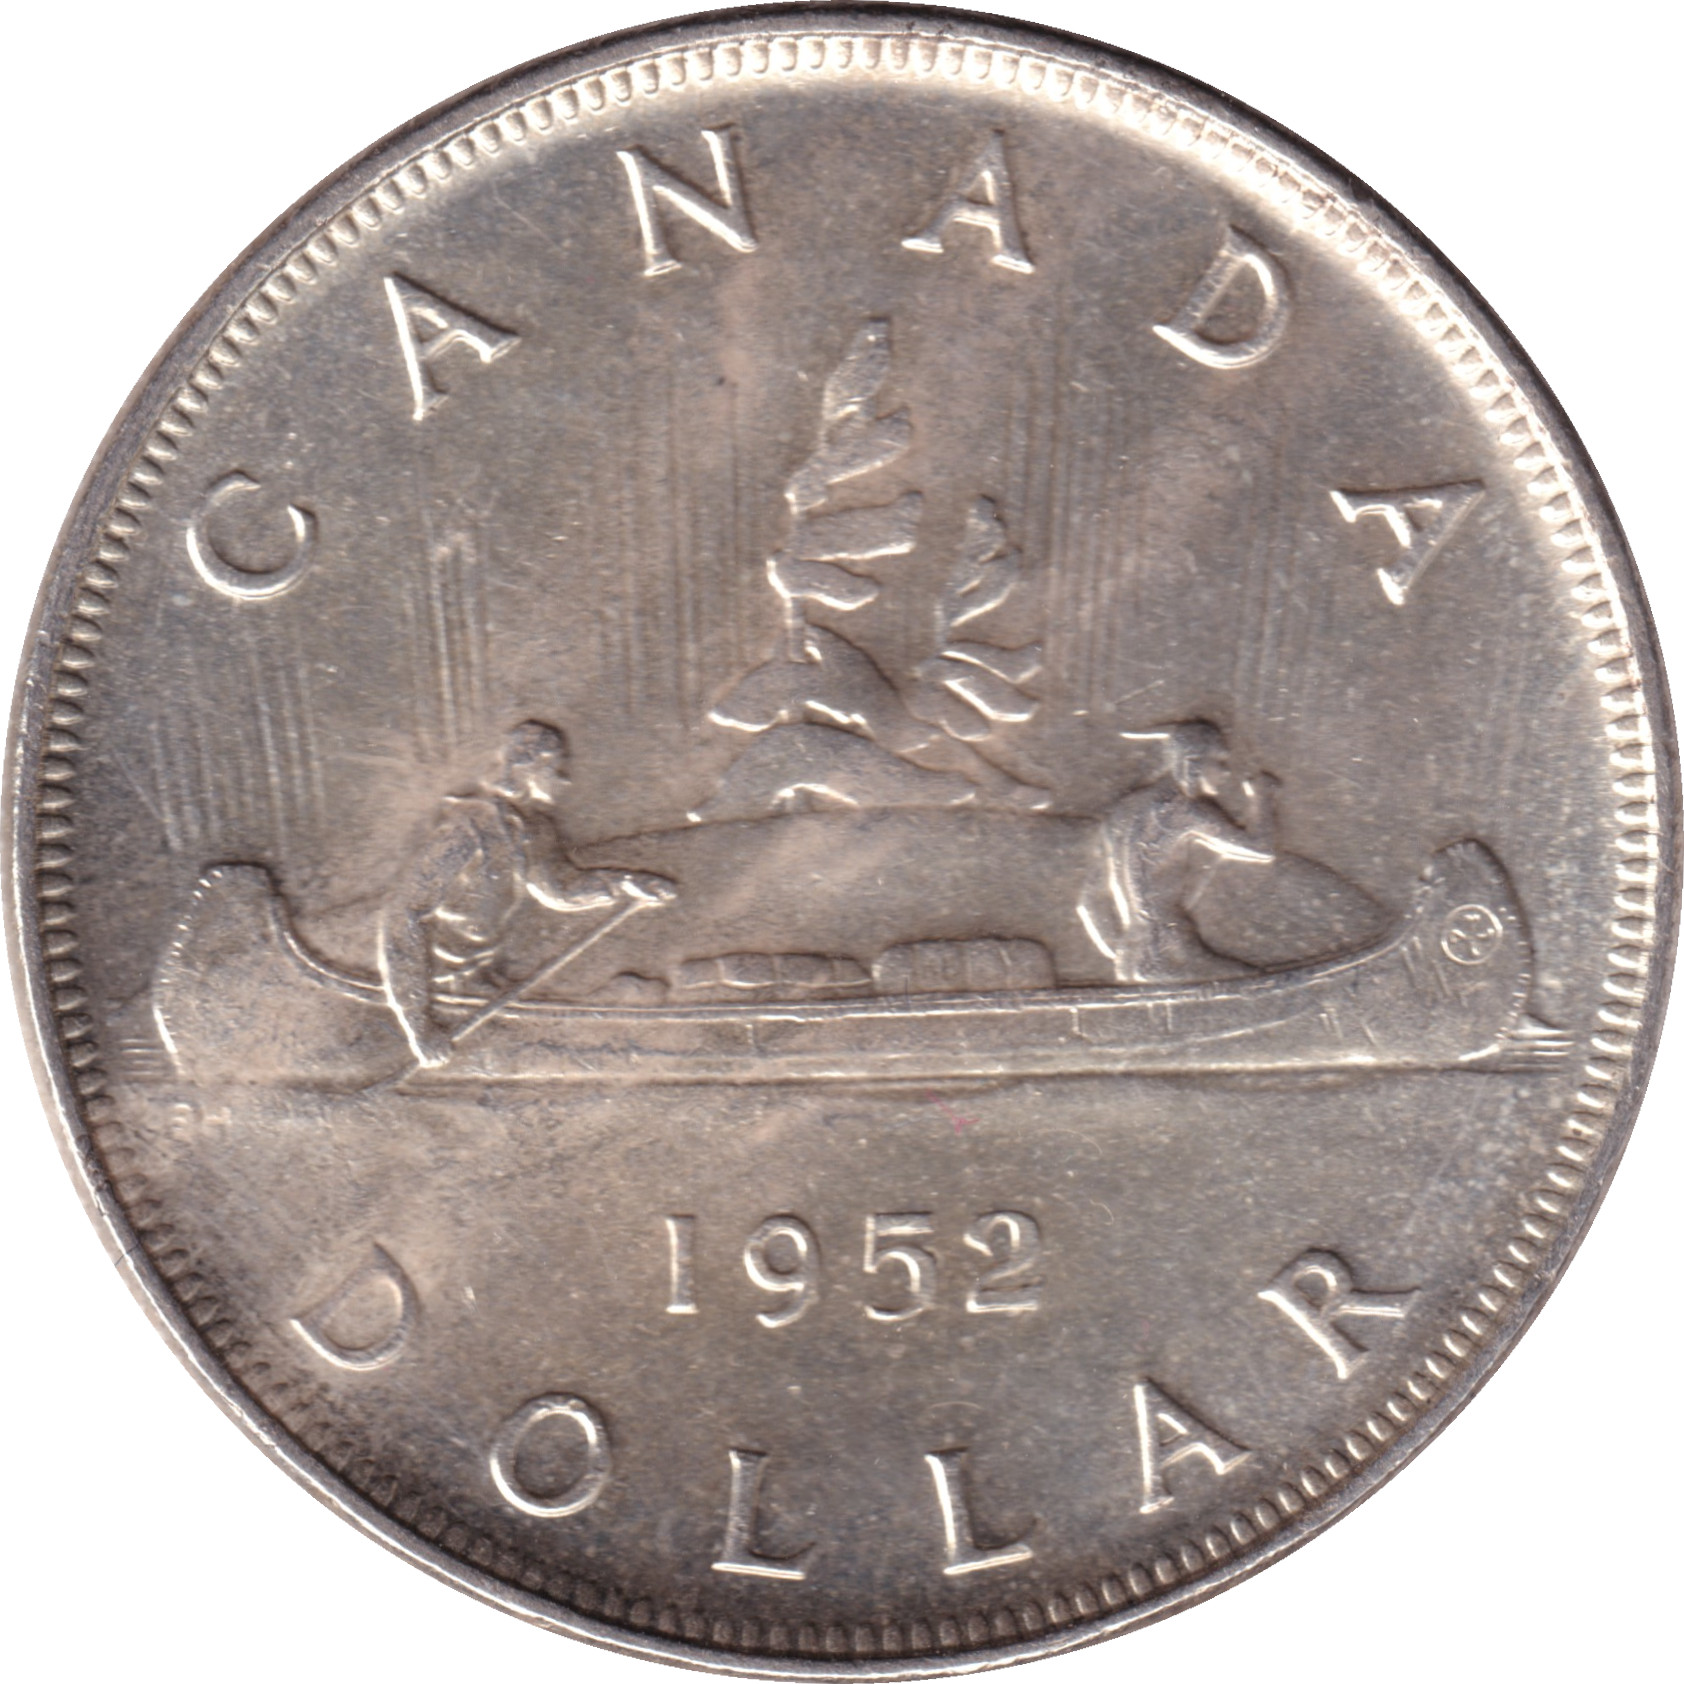 1 dollar - George VI